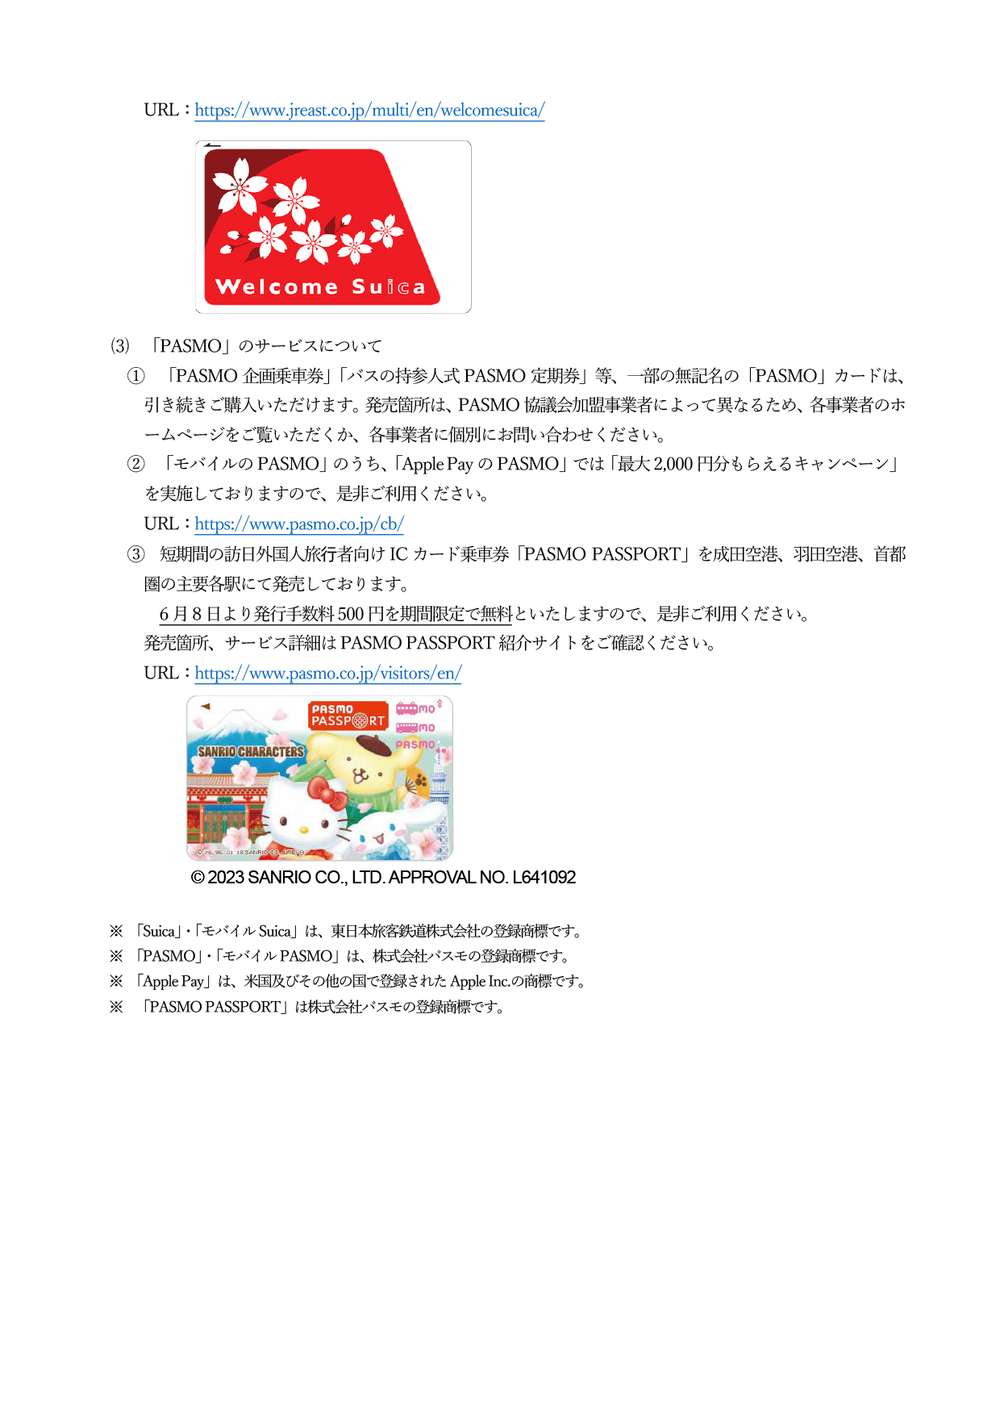 20230602_press_release_Suspension_of_Suica_and_PASMO_sales-2.jpg